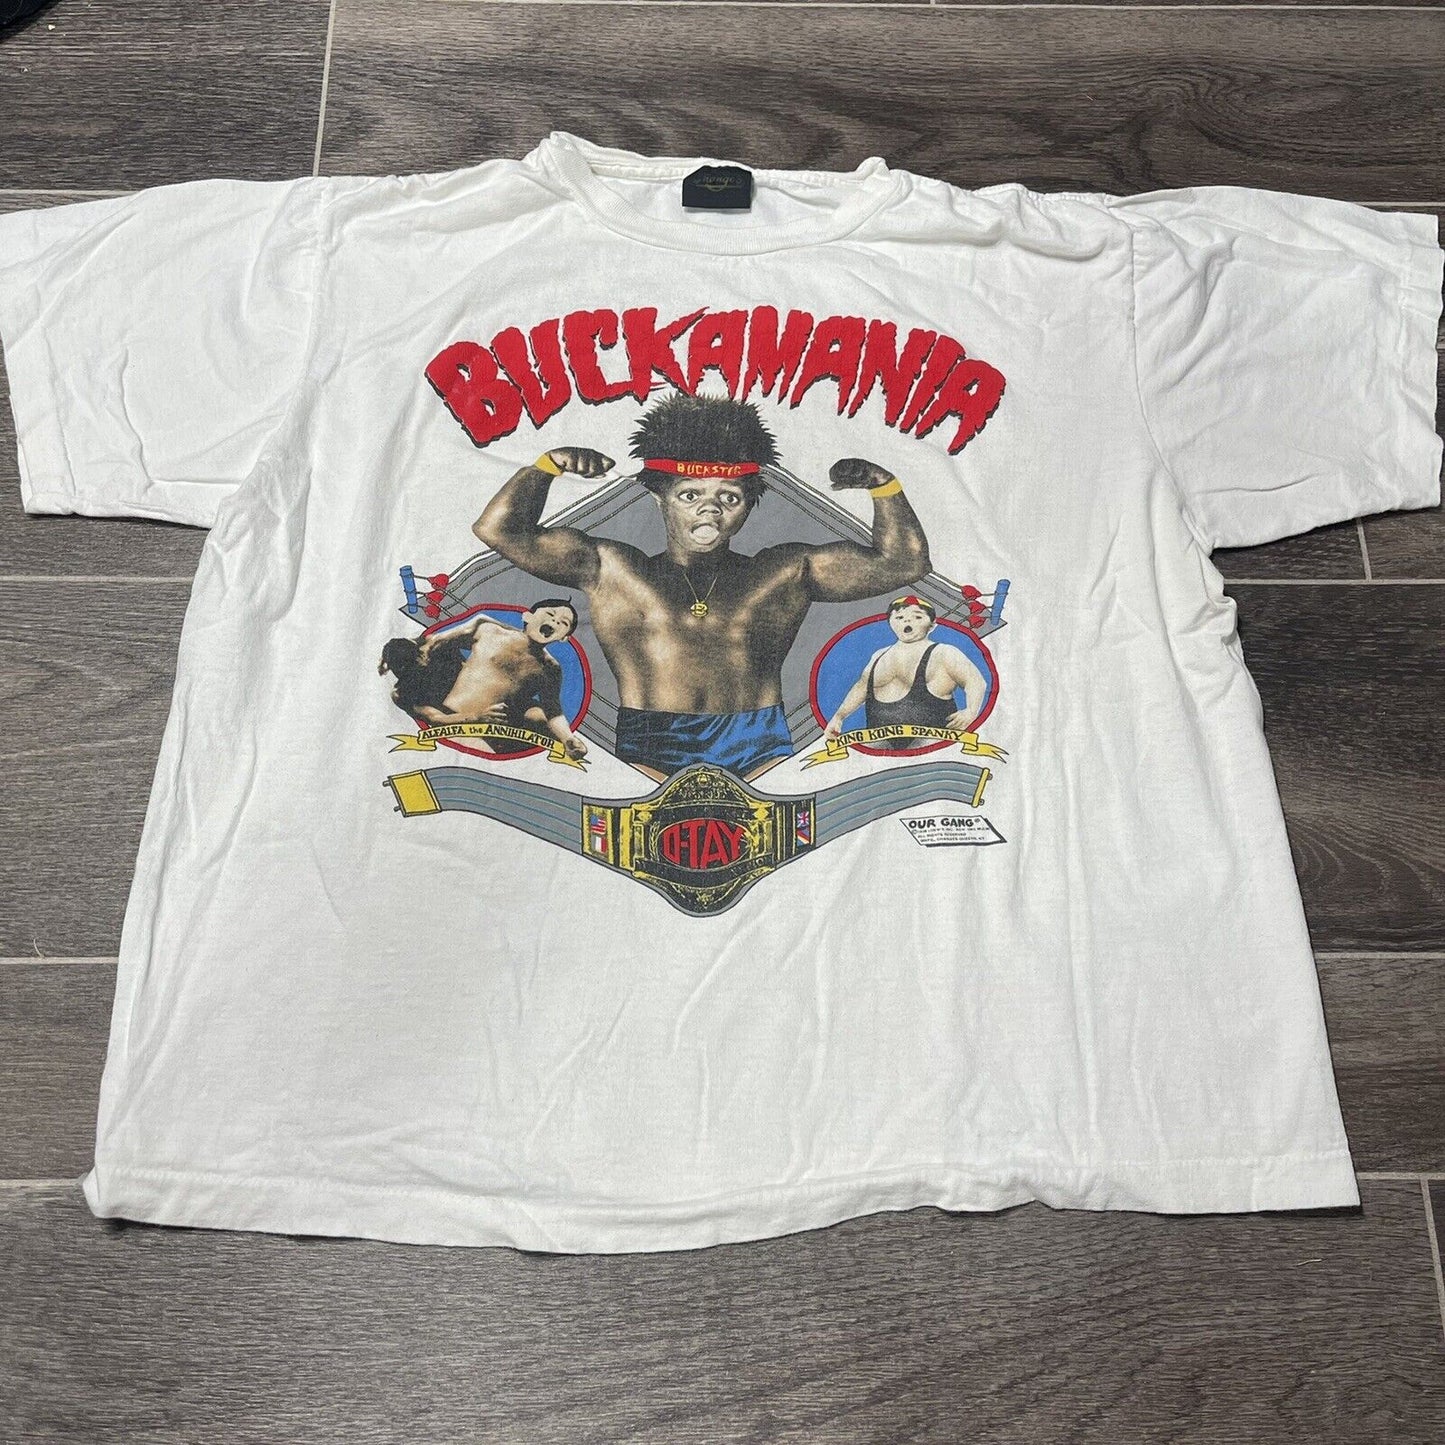 Vintage 1988 Buckwheat Buckamania Tee Shirt White Size Medium Little Rascals